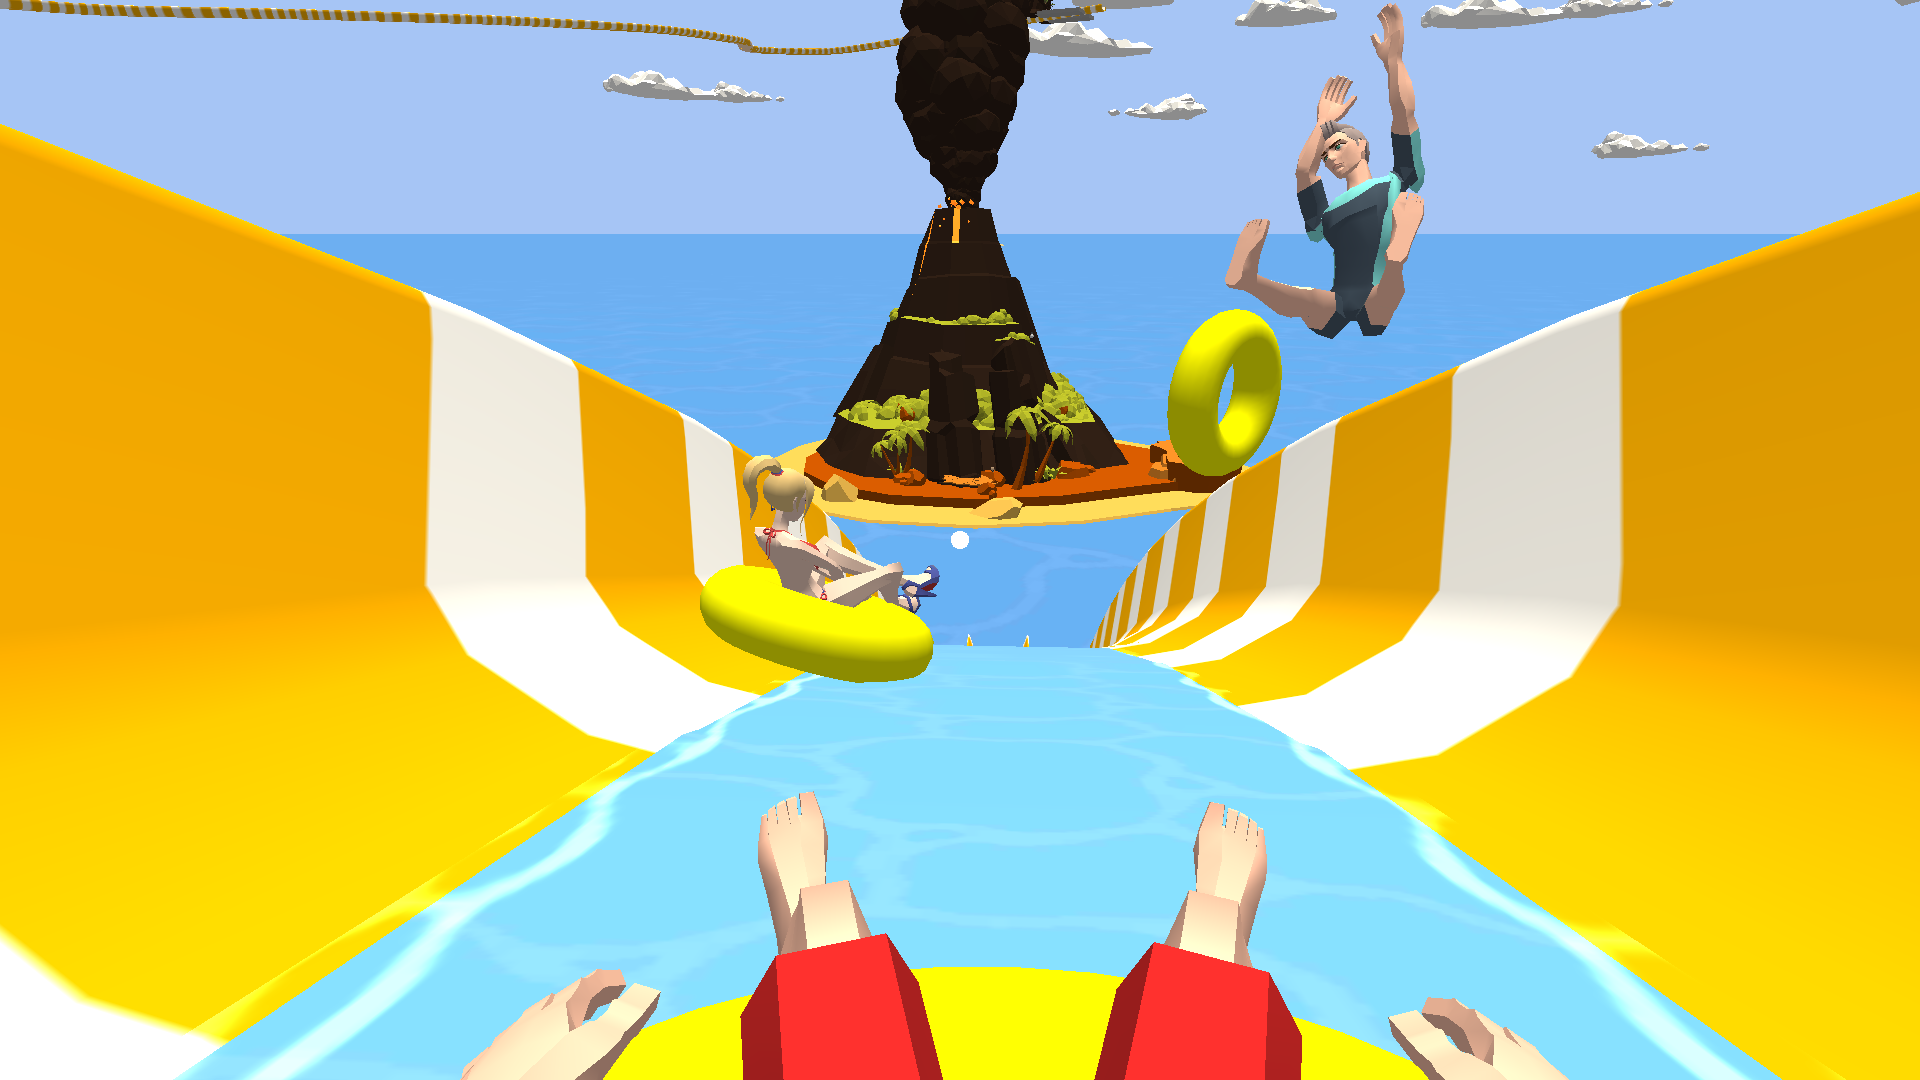 Screenshot 1 of VR Aqua Thrills: Cardboard VR のウォーター スライド ゲーム 1.0.1